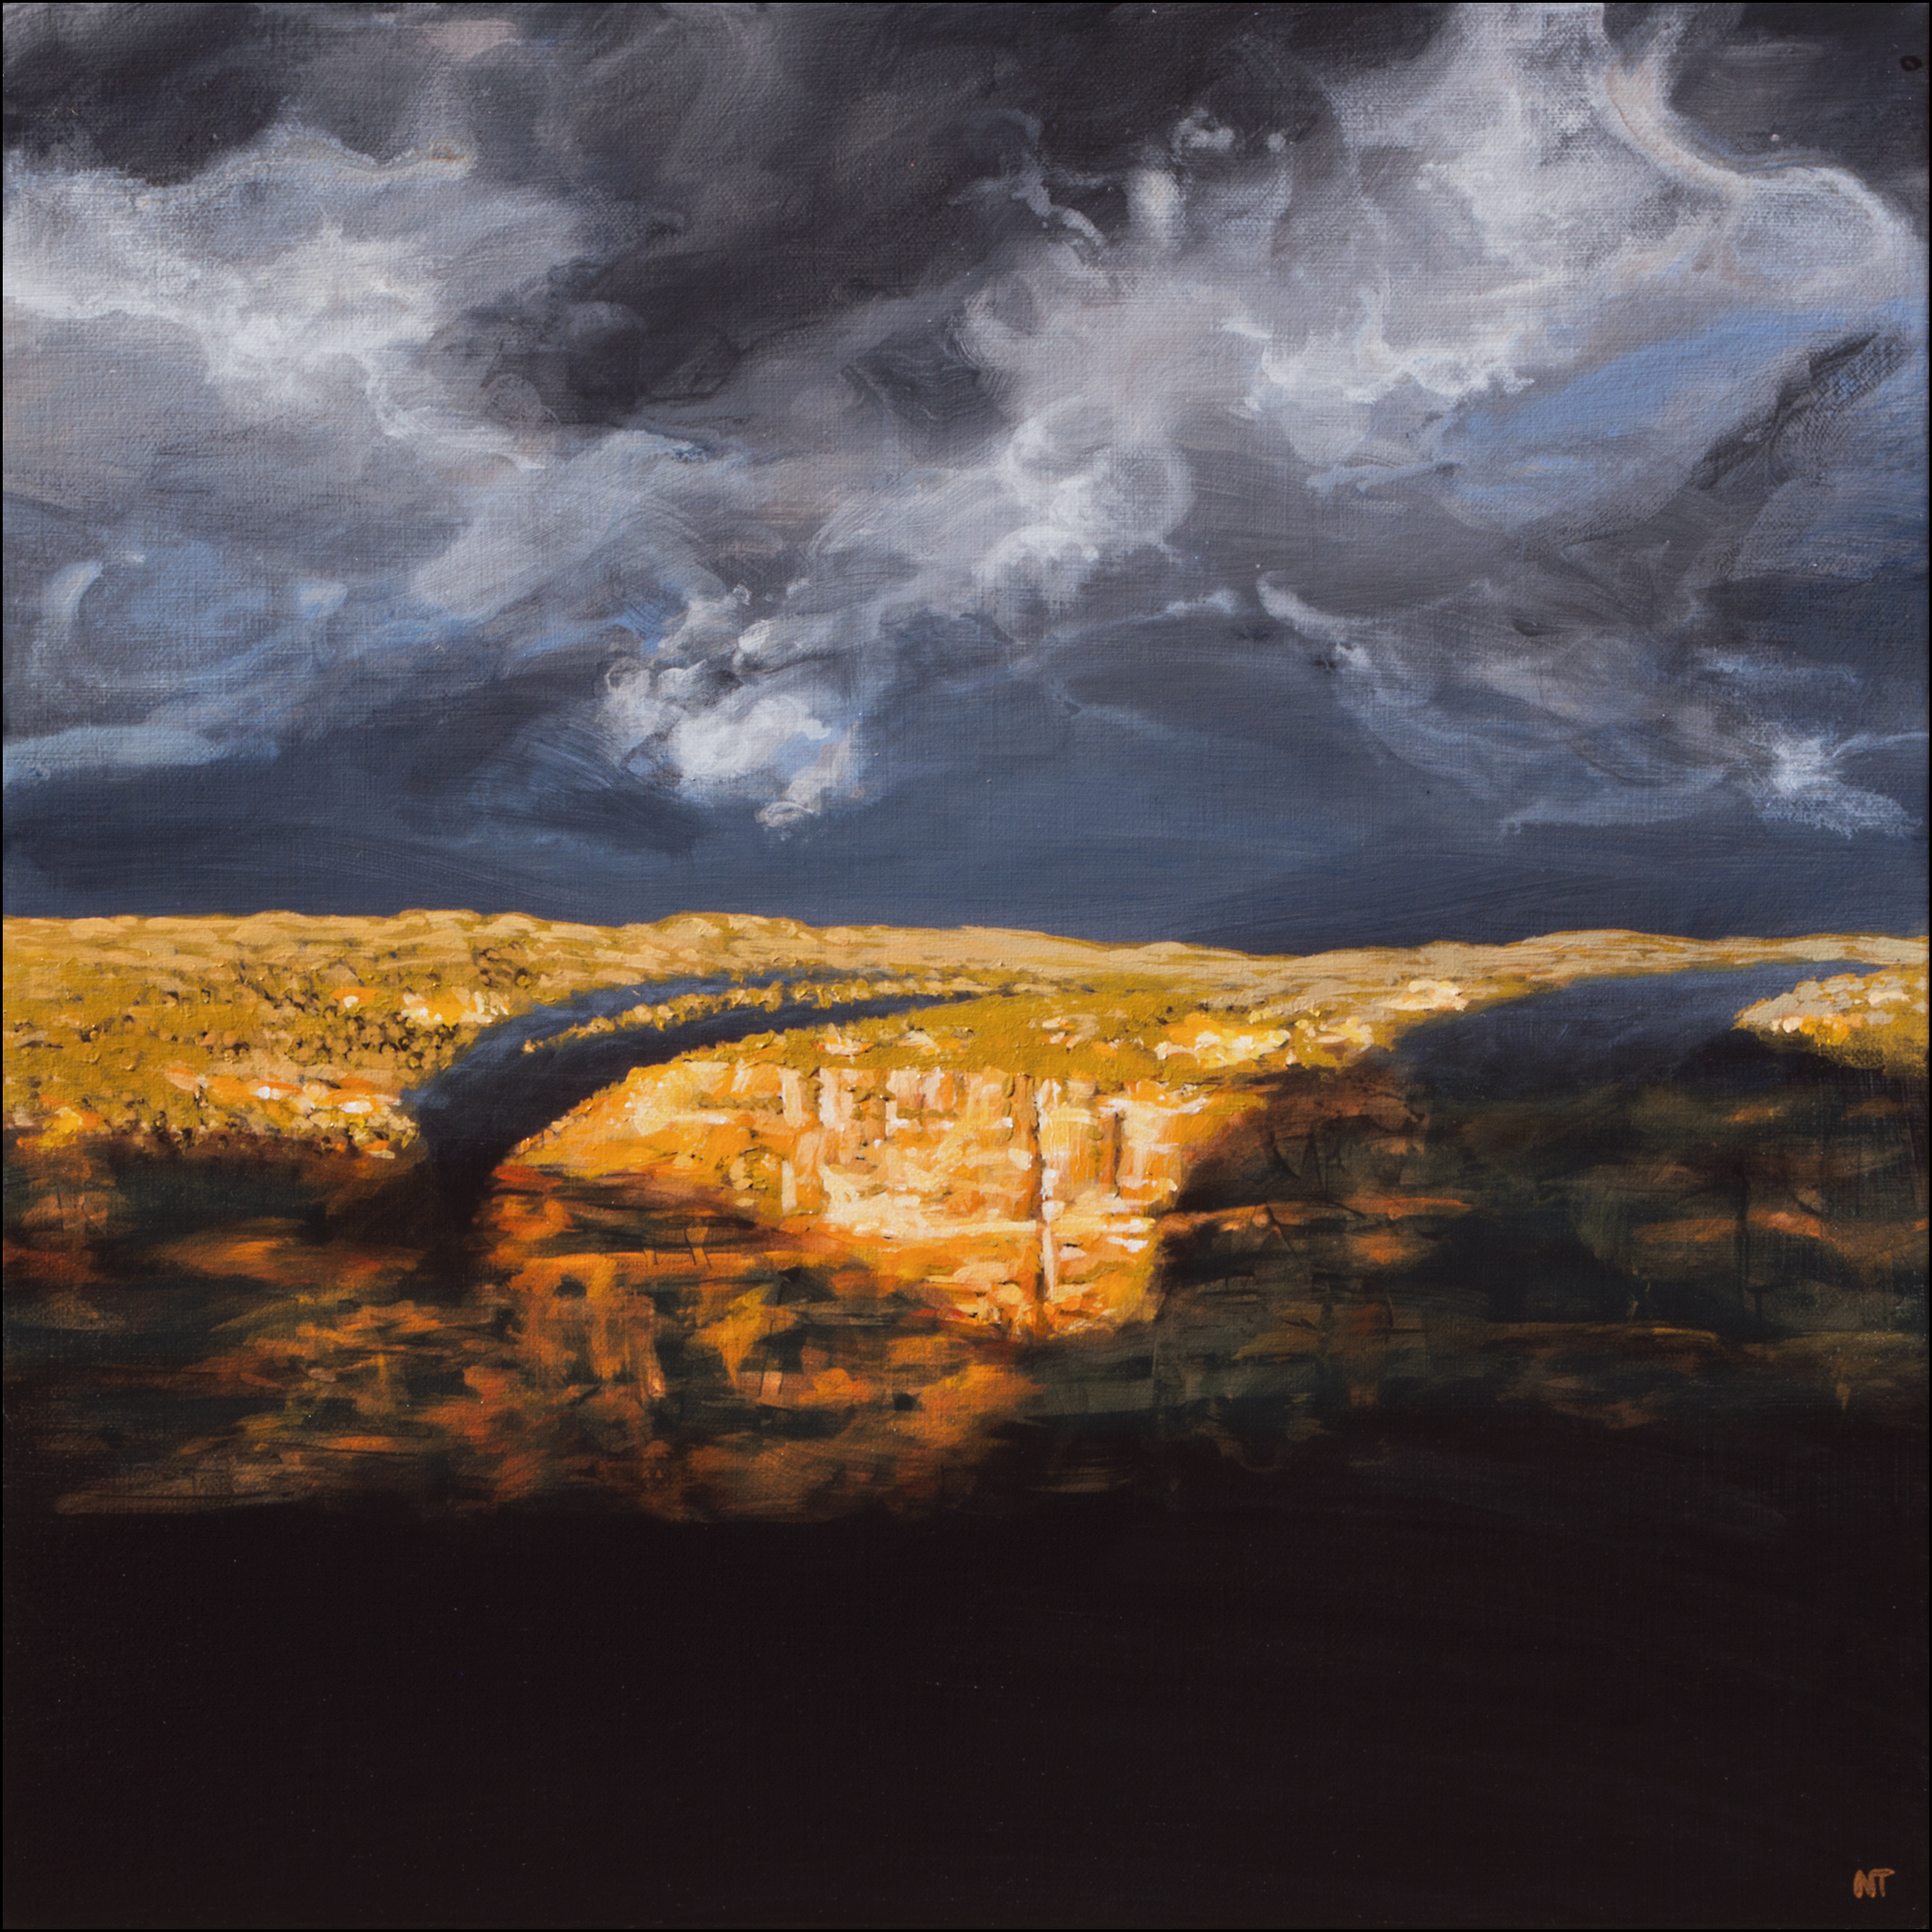 Neil Taylor 'Storm Over Blackwall Glen' acrylic on canvas 46 x 46cm $3,800